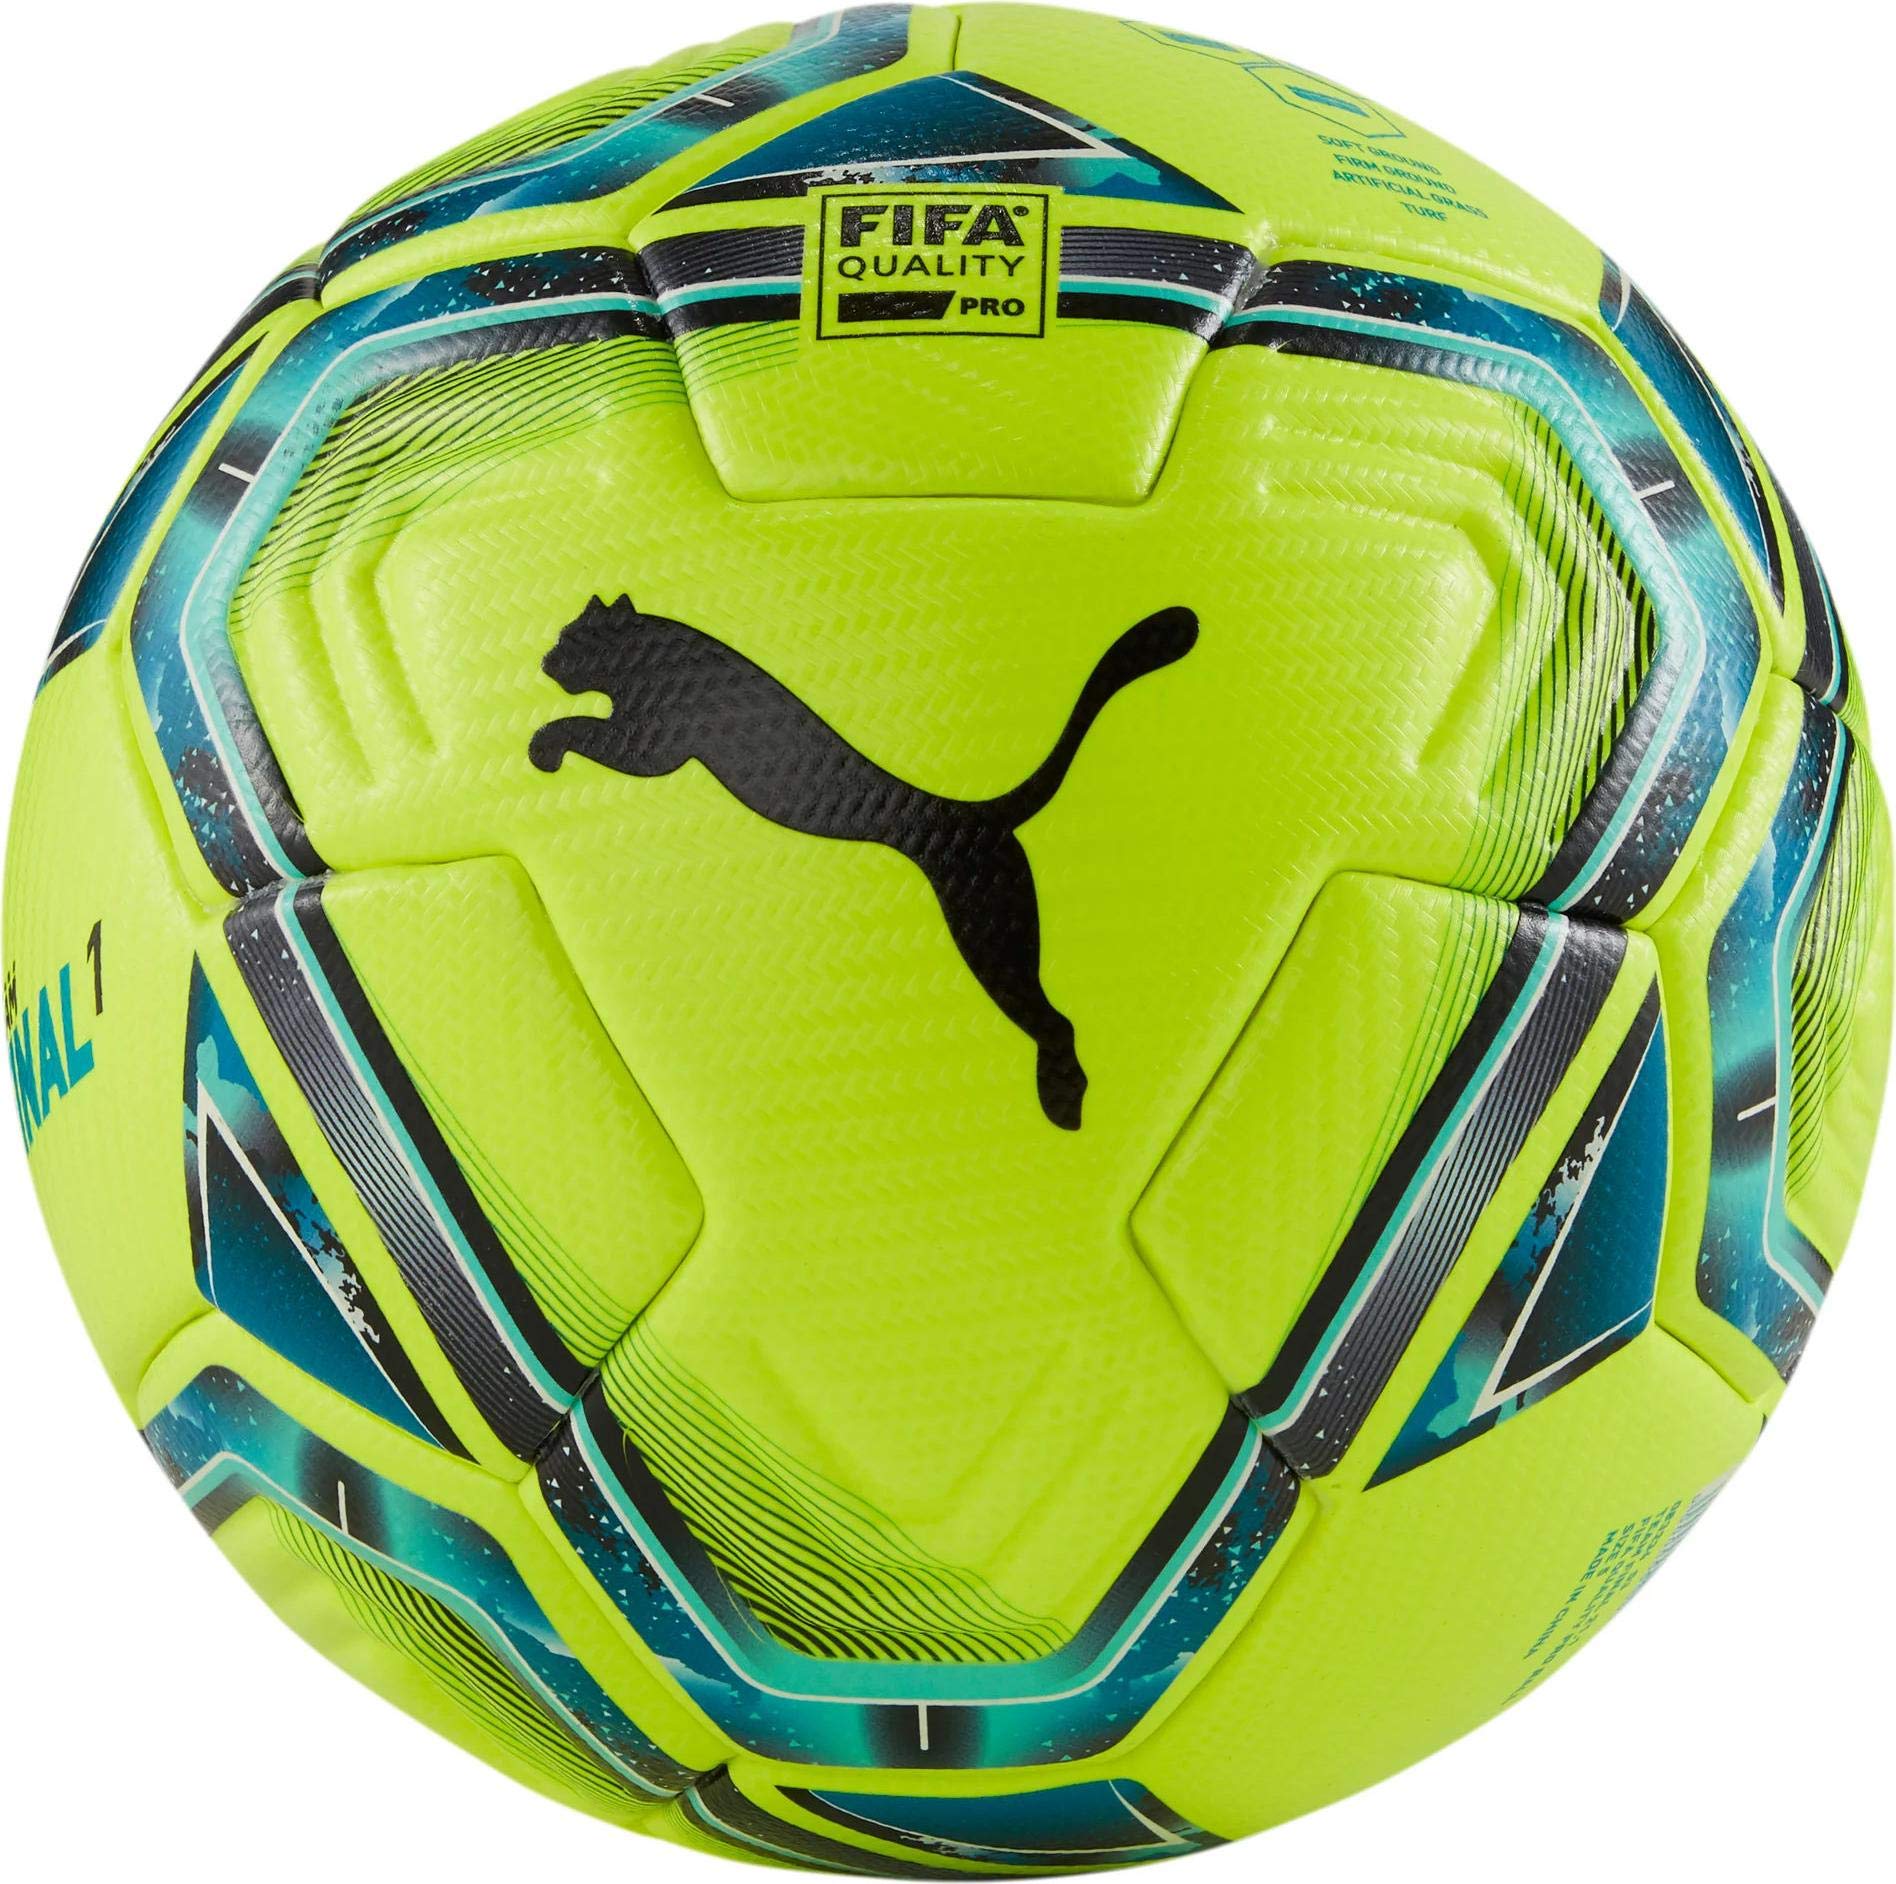 PUMA TEAMFINAL 211 FIFA Quality PRO Ball, Size 5 (Lemon Tonic-Spectra green-Rising Teal-puma Black-clear Sky)